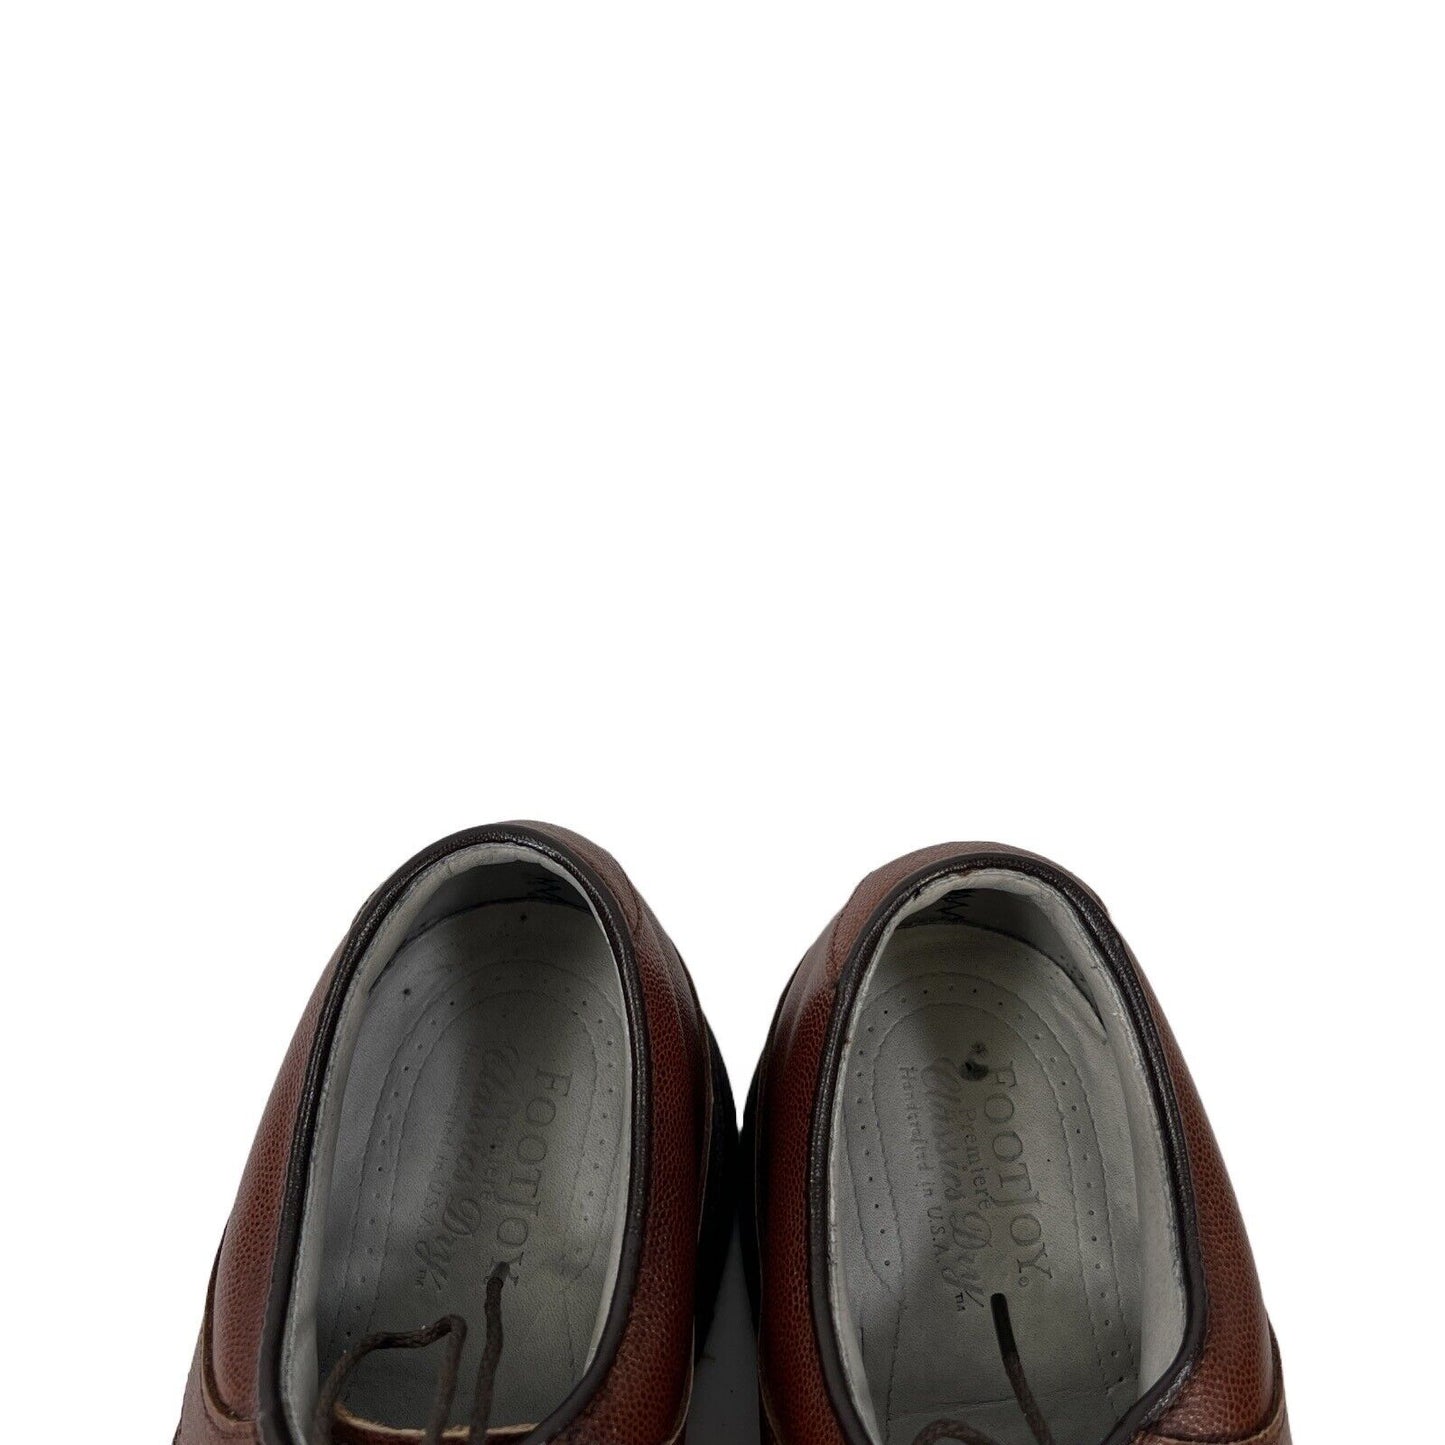 Foot Joy Men's Brown Leather Lace Up Oxford Dress Shoes - 9